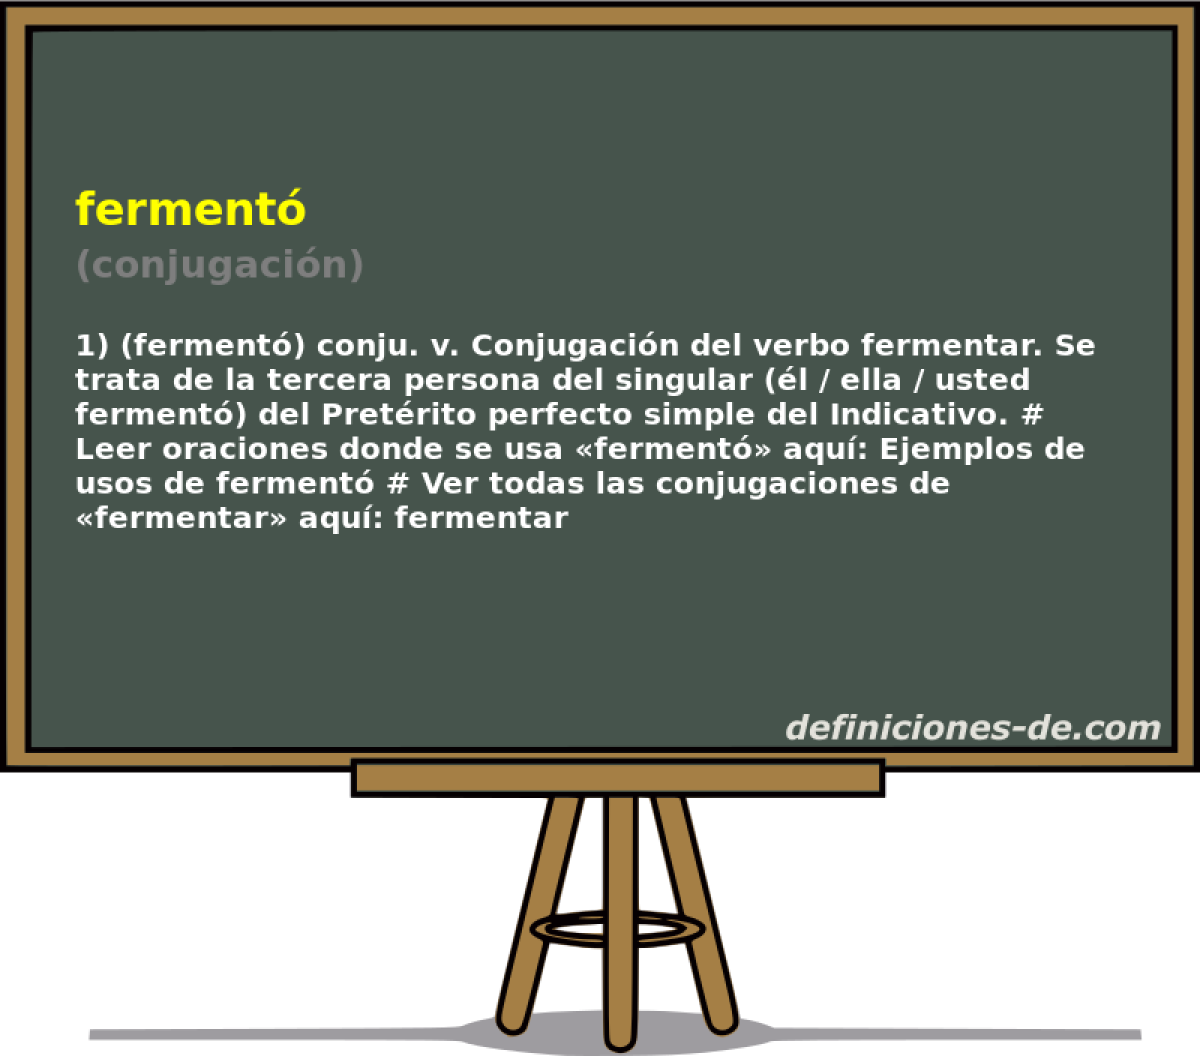 ferment (conjugacin)